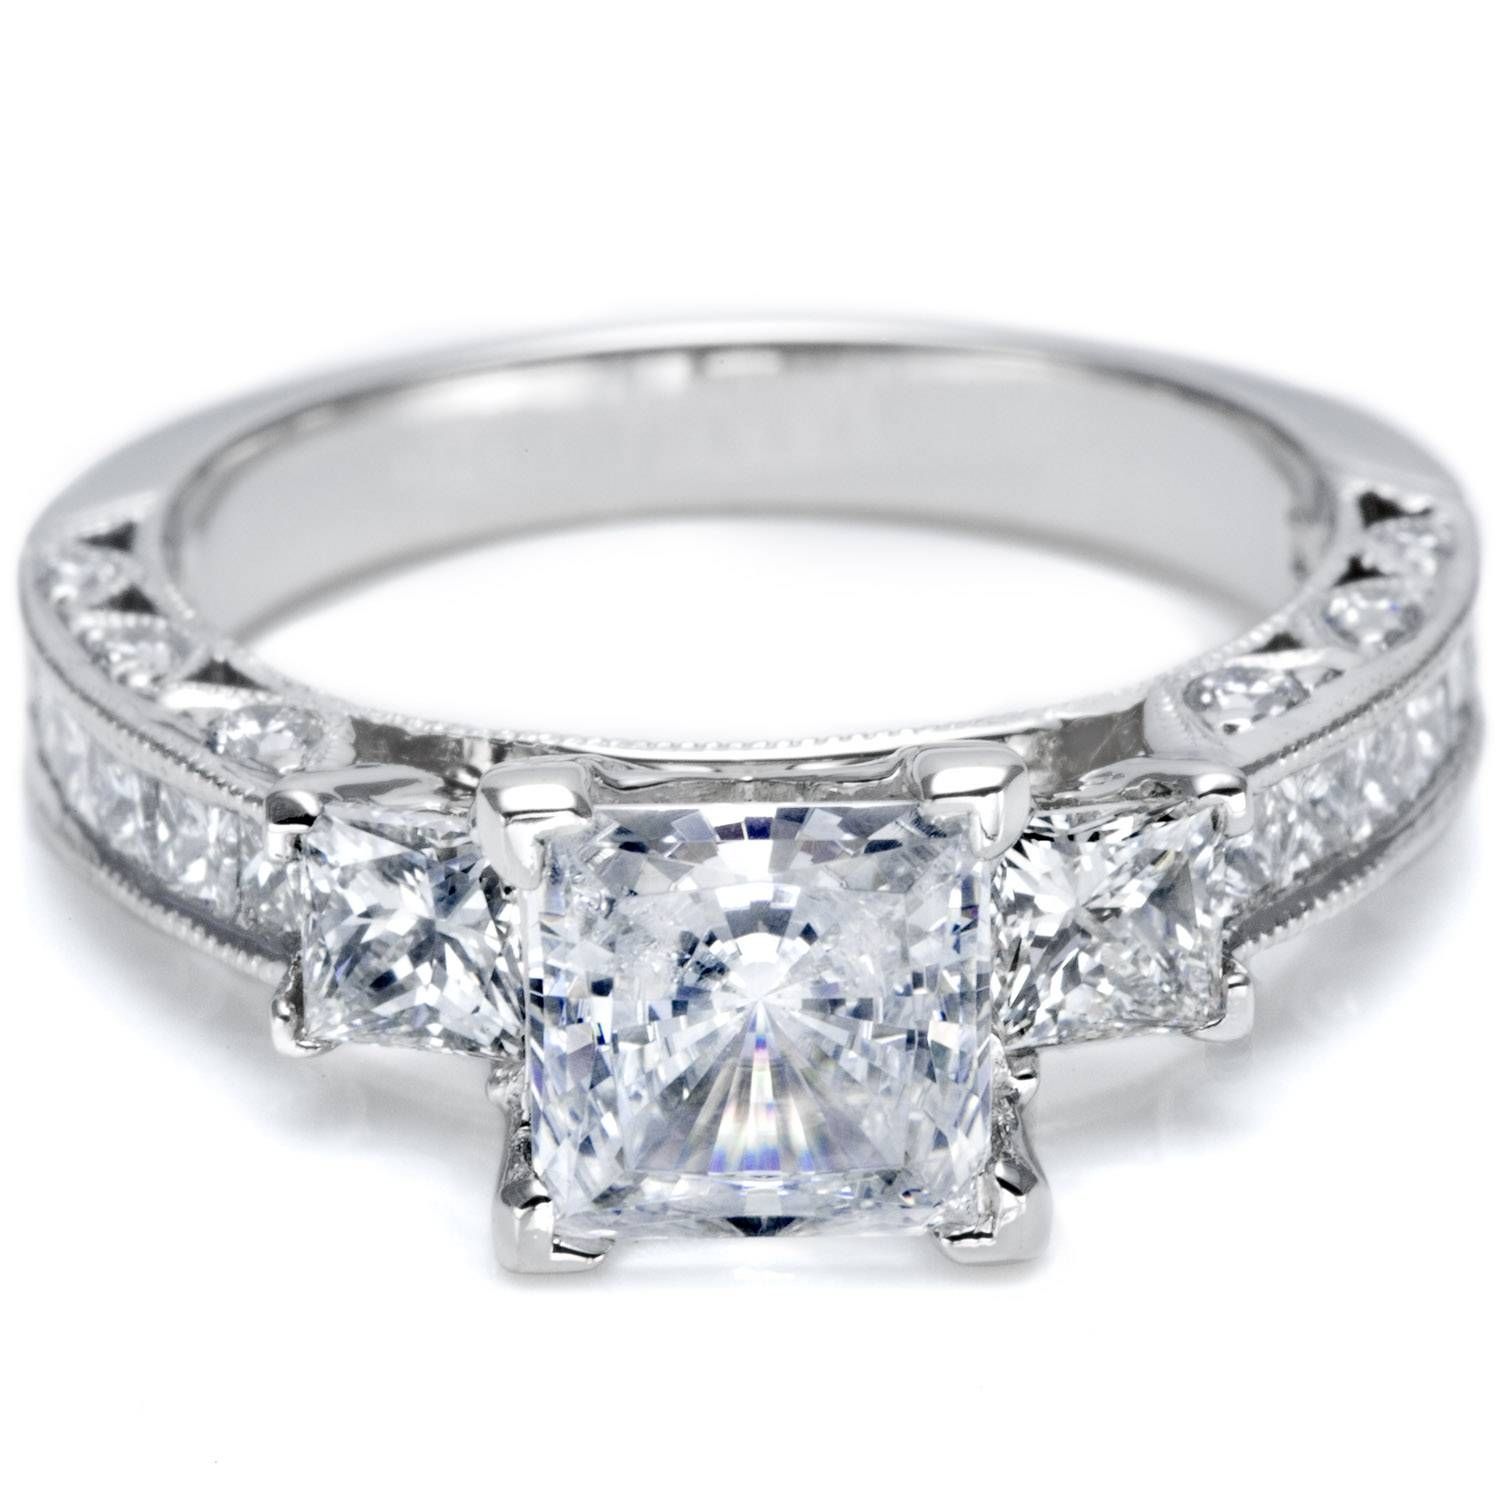 Awe Inspiring Princess Cut Engagement Rings Gold Band Tags Inside Princess Cut Diamond Wedding Rings For Women (View 7 of 15)